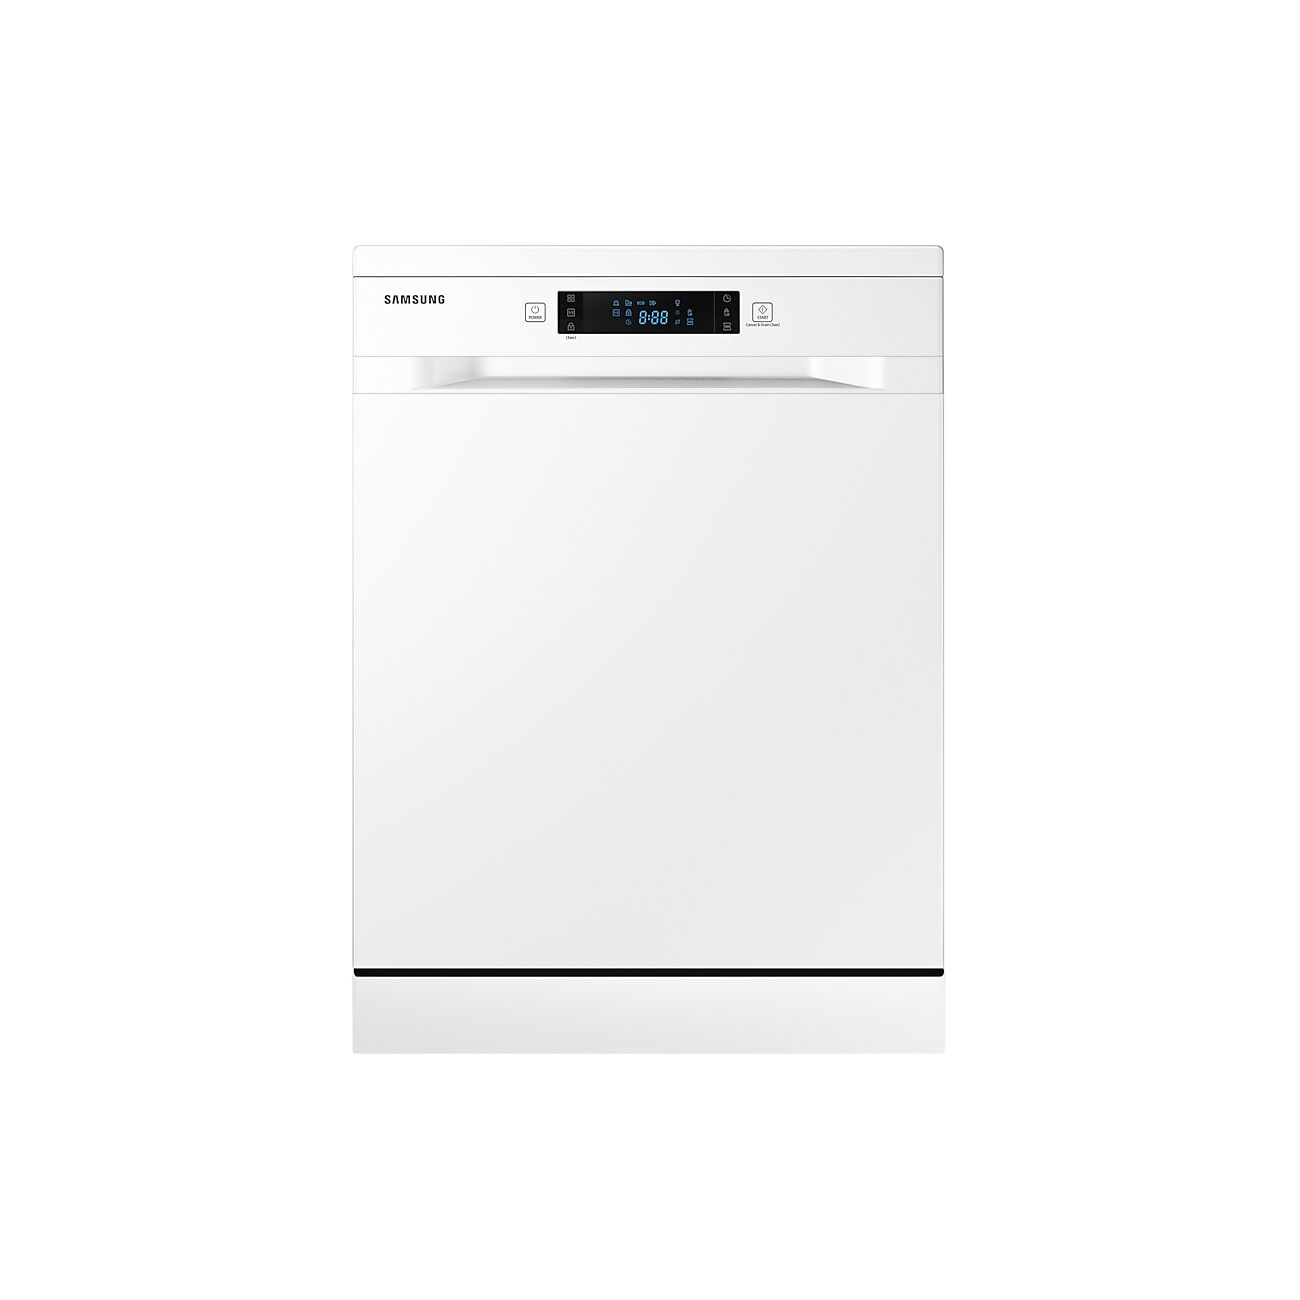 Samsung 2020 Freestanding Full Size Dishwasher 13 Place Settings 48dBA in White (DW60M5050FW/EU)